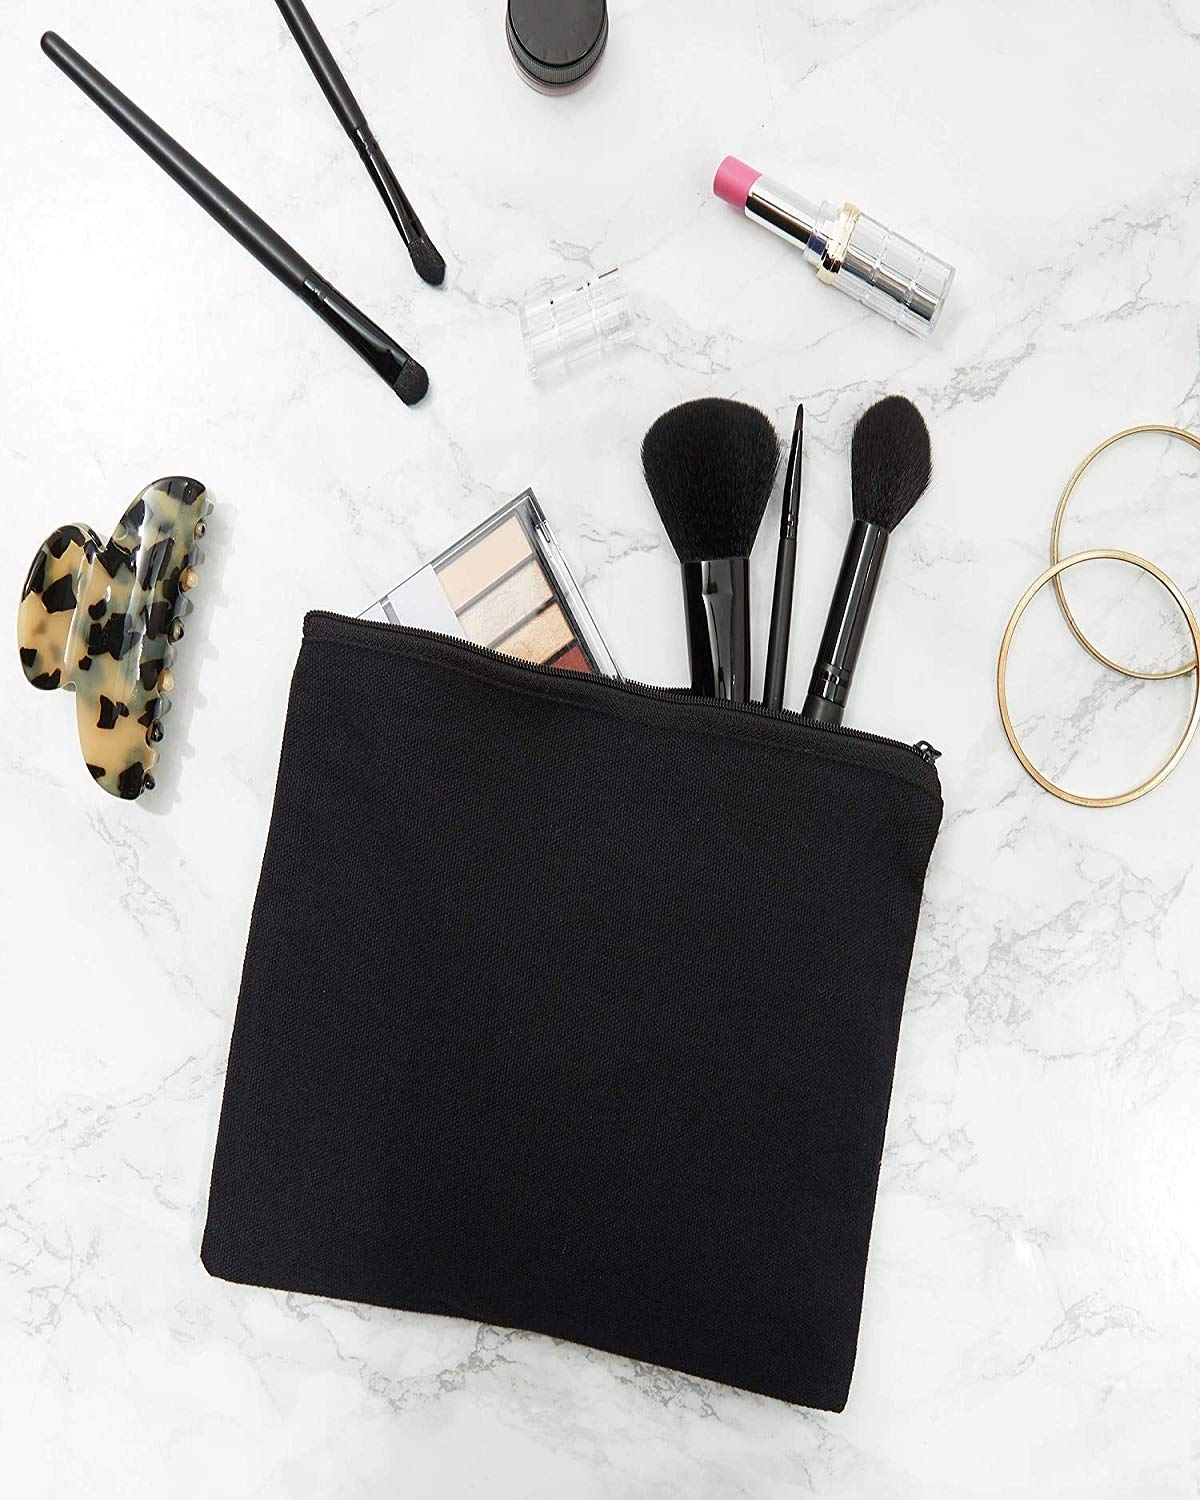 NJ Cosmetic Bag Multipurpose Makeup Bag with Zipper Canvas Bag, Travel Toiletry Pouch DIY Bag, Jewelry Bag, Travel Bag, Cosmetic Bag (5.5x5.5 Inches): 10 Pcs